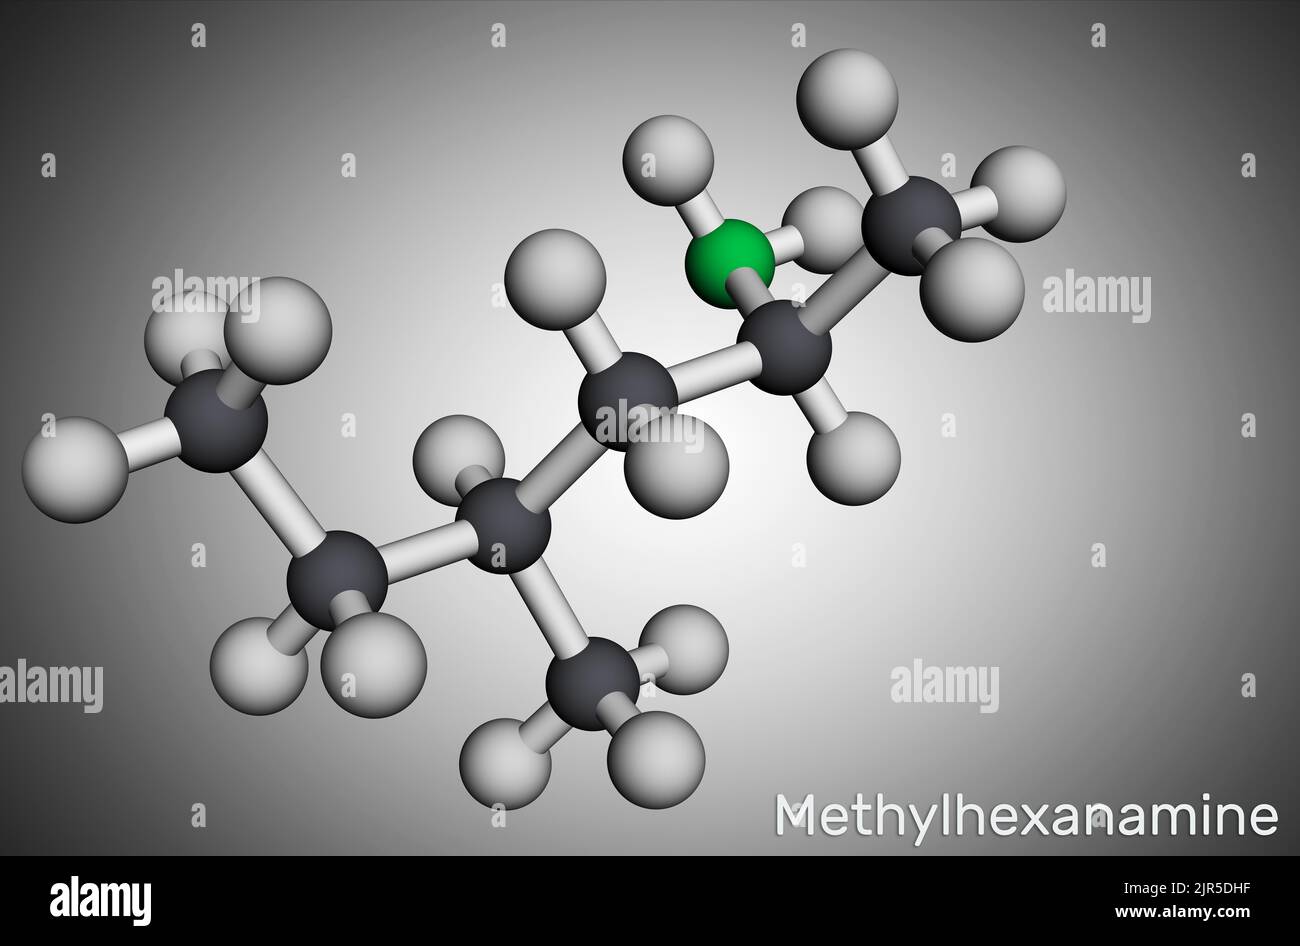 Methylhexanamine, methylhexamine, dimethylamylamine, DMAA molecule. It is alkylamine, indirect sympathomimetic drug. Molecular model. 3D rendering. Il Stock Photo